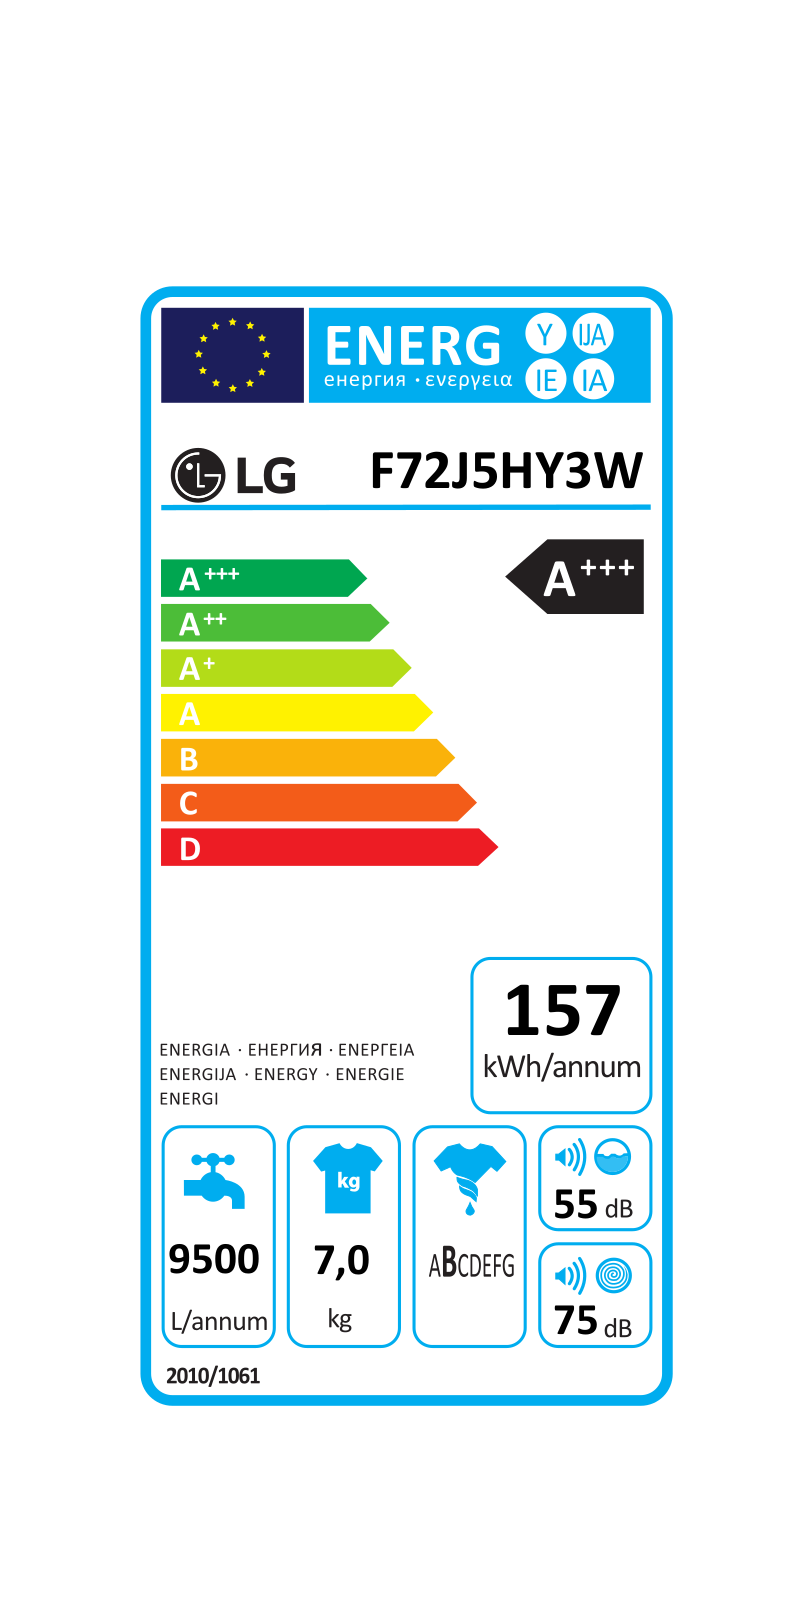 LG F72J5HY3W Energy label